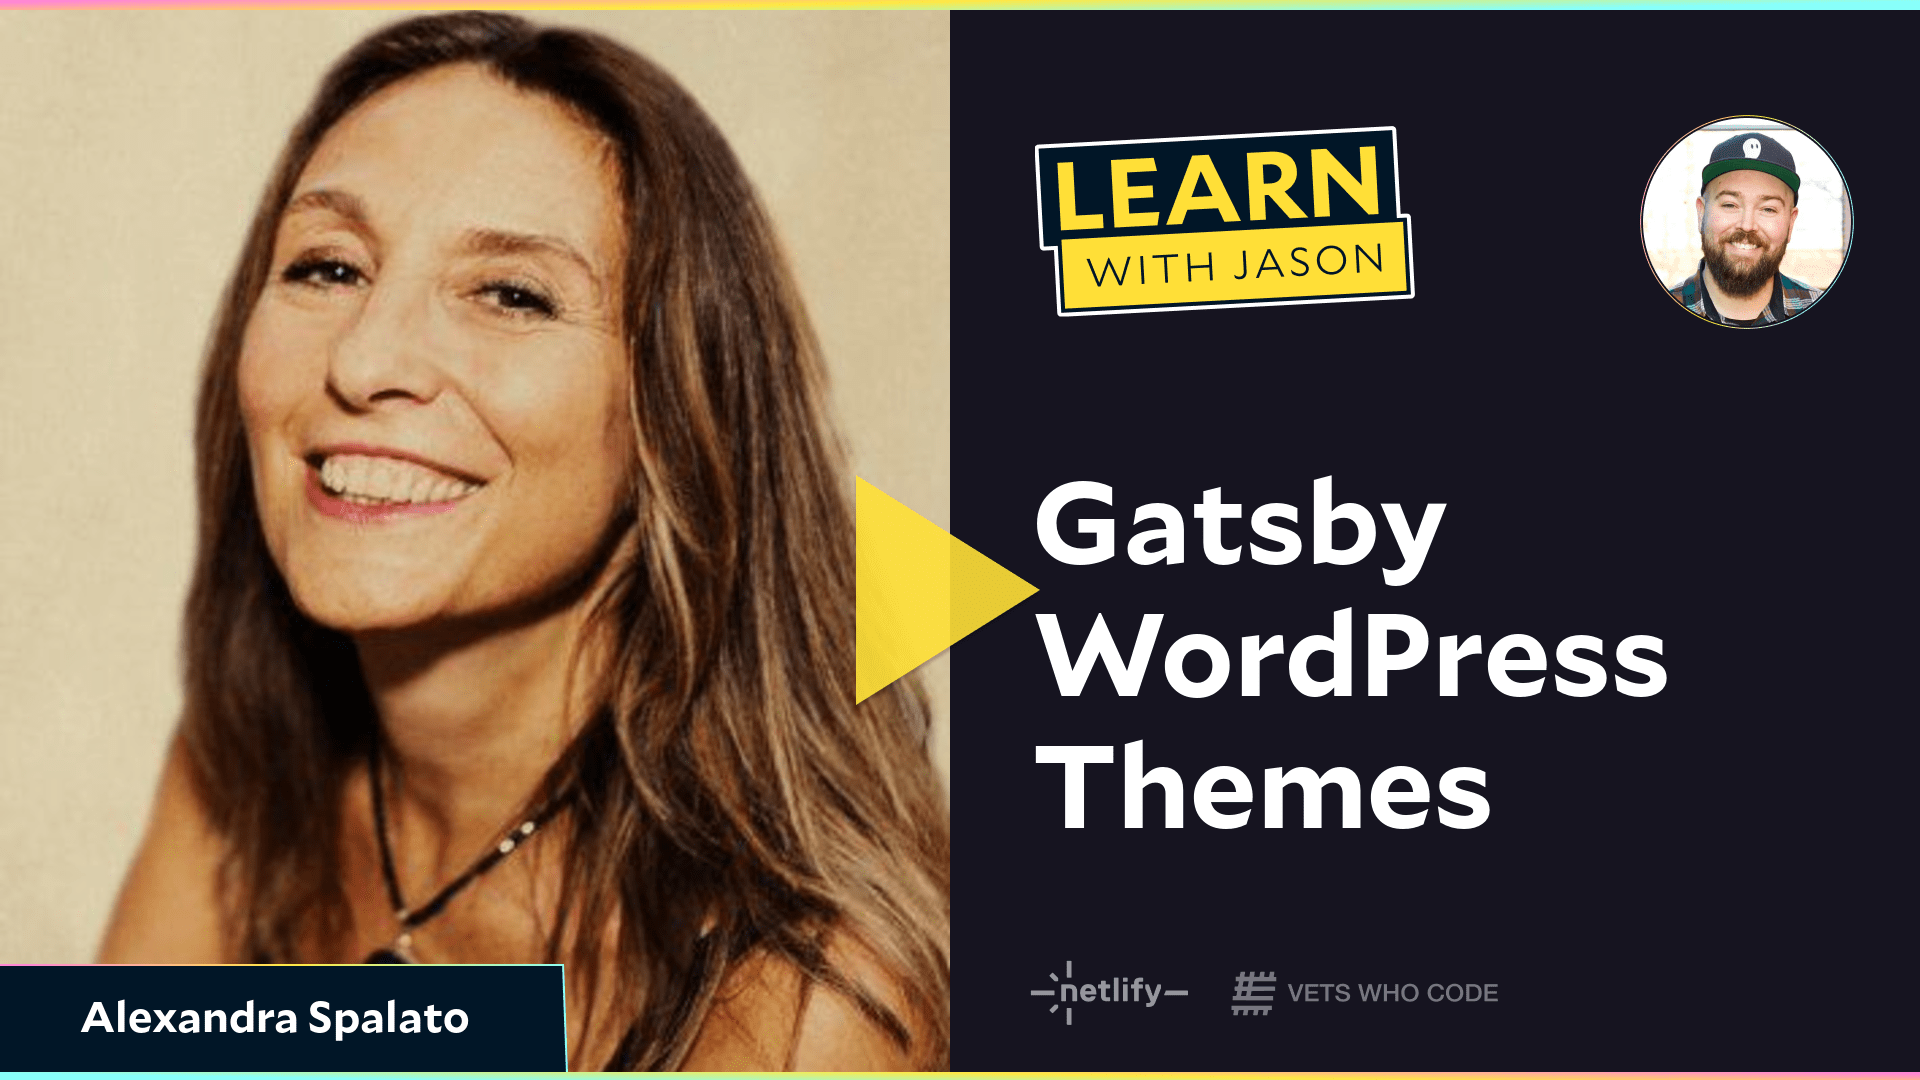 Gatsby WordPress Themes (with Alexandra Spalato)